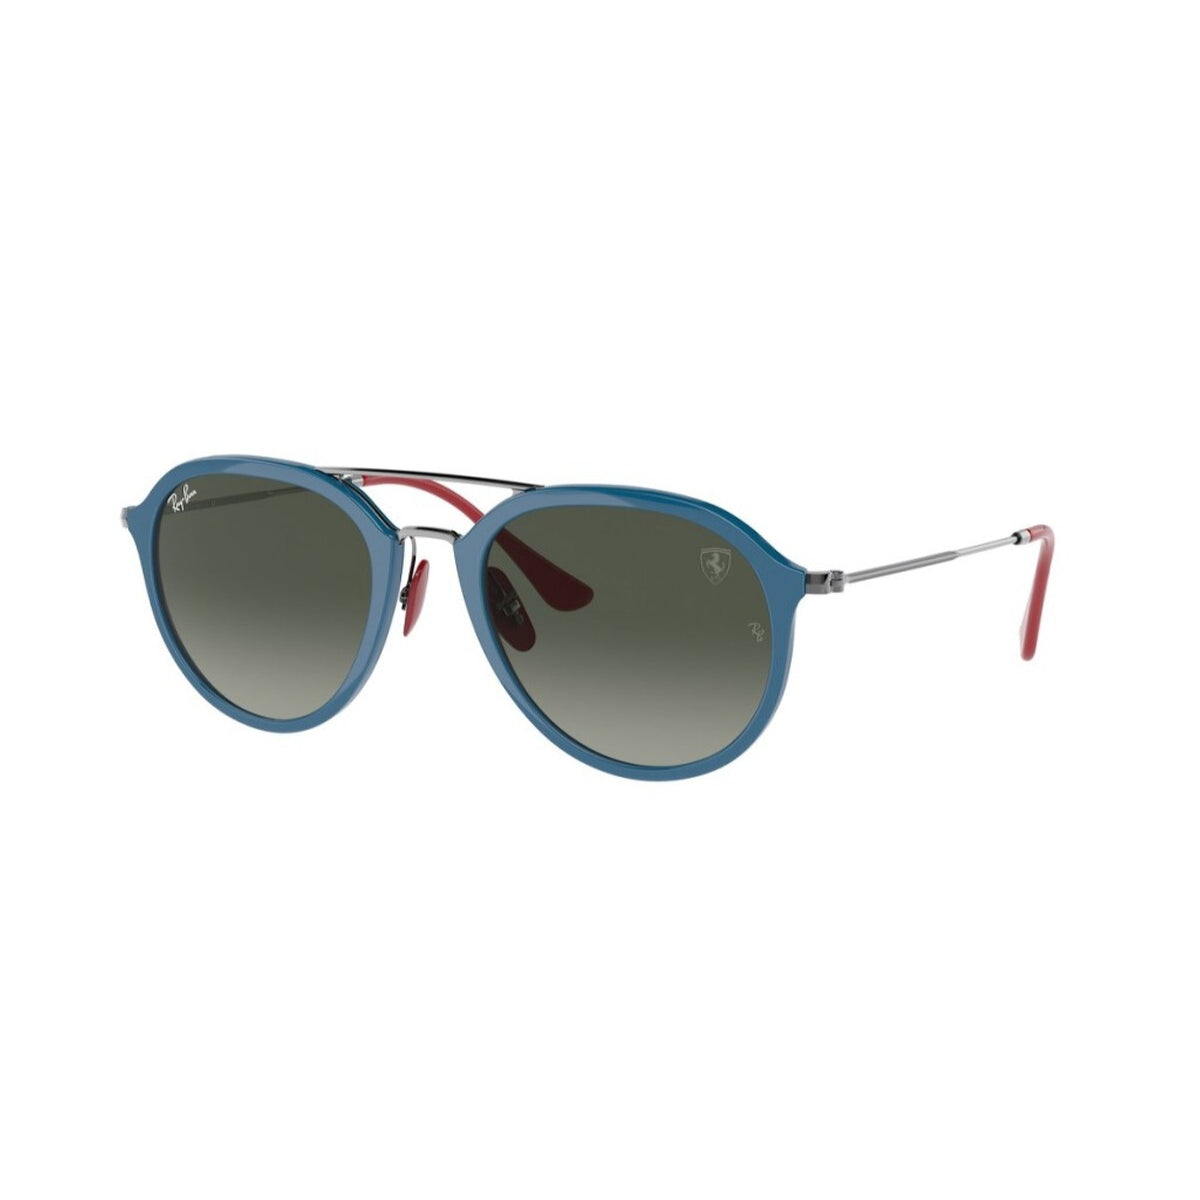 Ray-Ban Unisex Sunglasses  Blue Grey Gradient Plastic Plastic  0RB4369M F66971 53